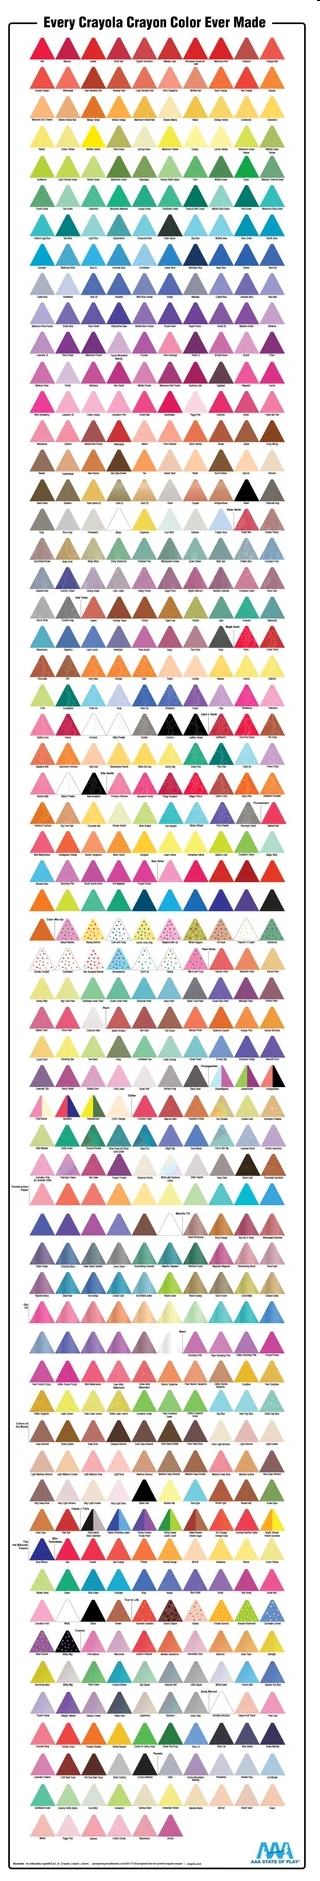 Crayola colors.JPG